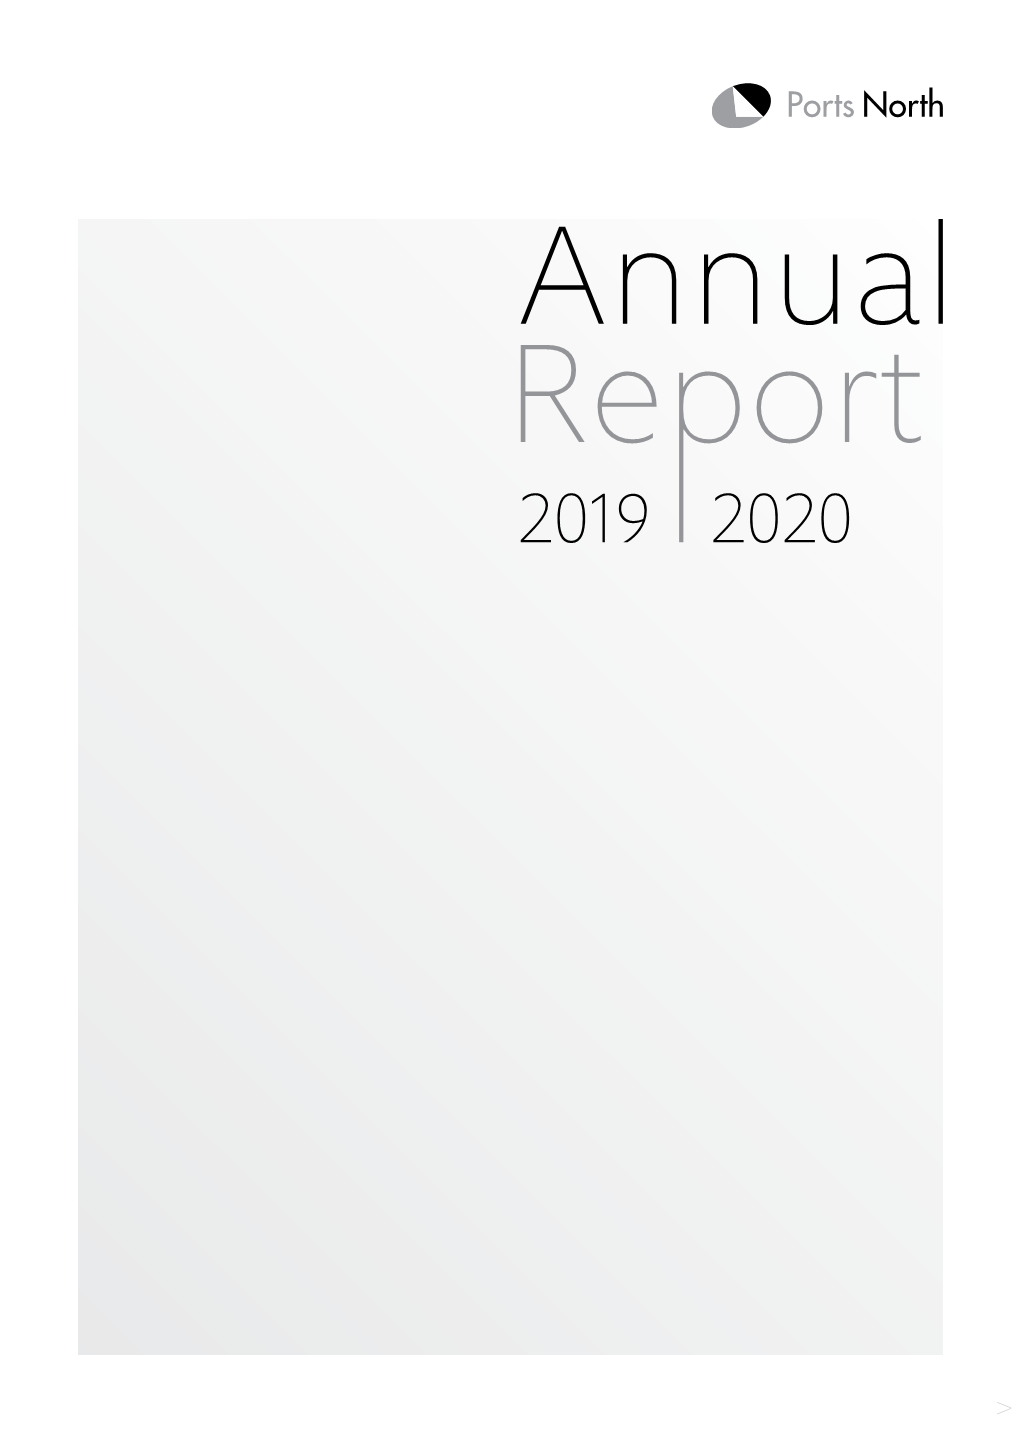 Ports North Annua Re Ort 2019 2020